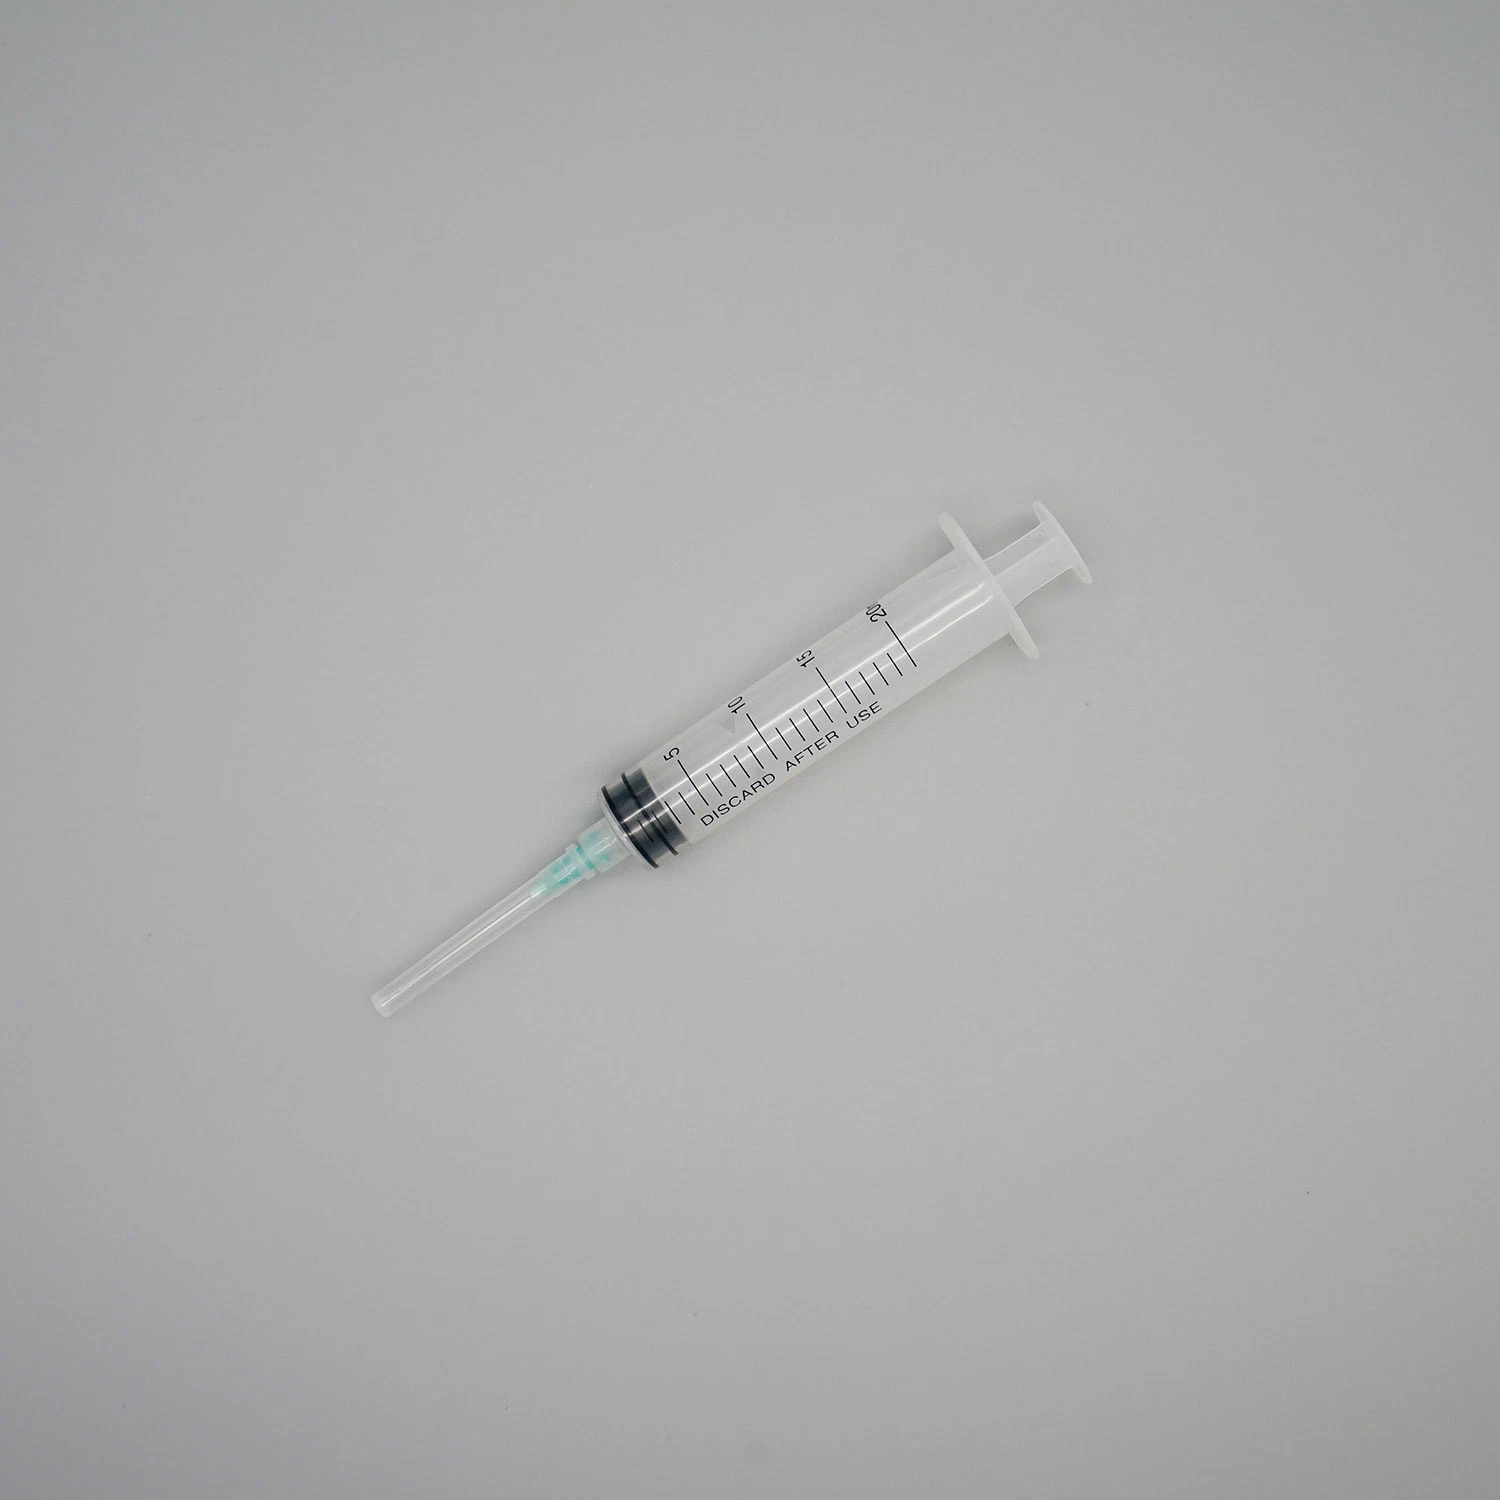 La insulina desechable jeringa con aguja fija